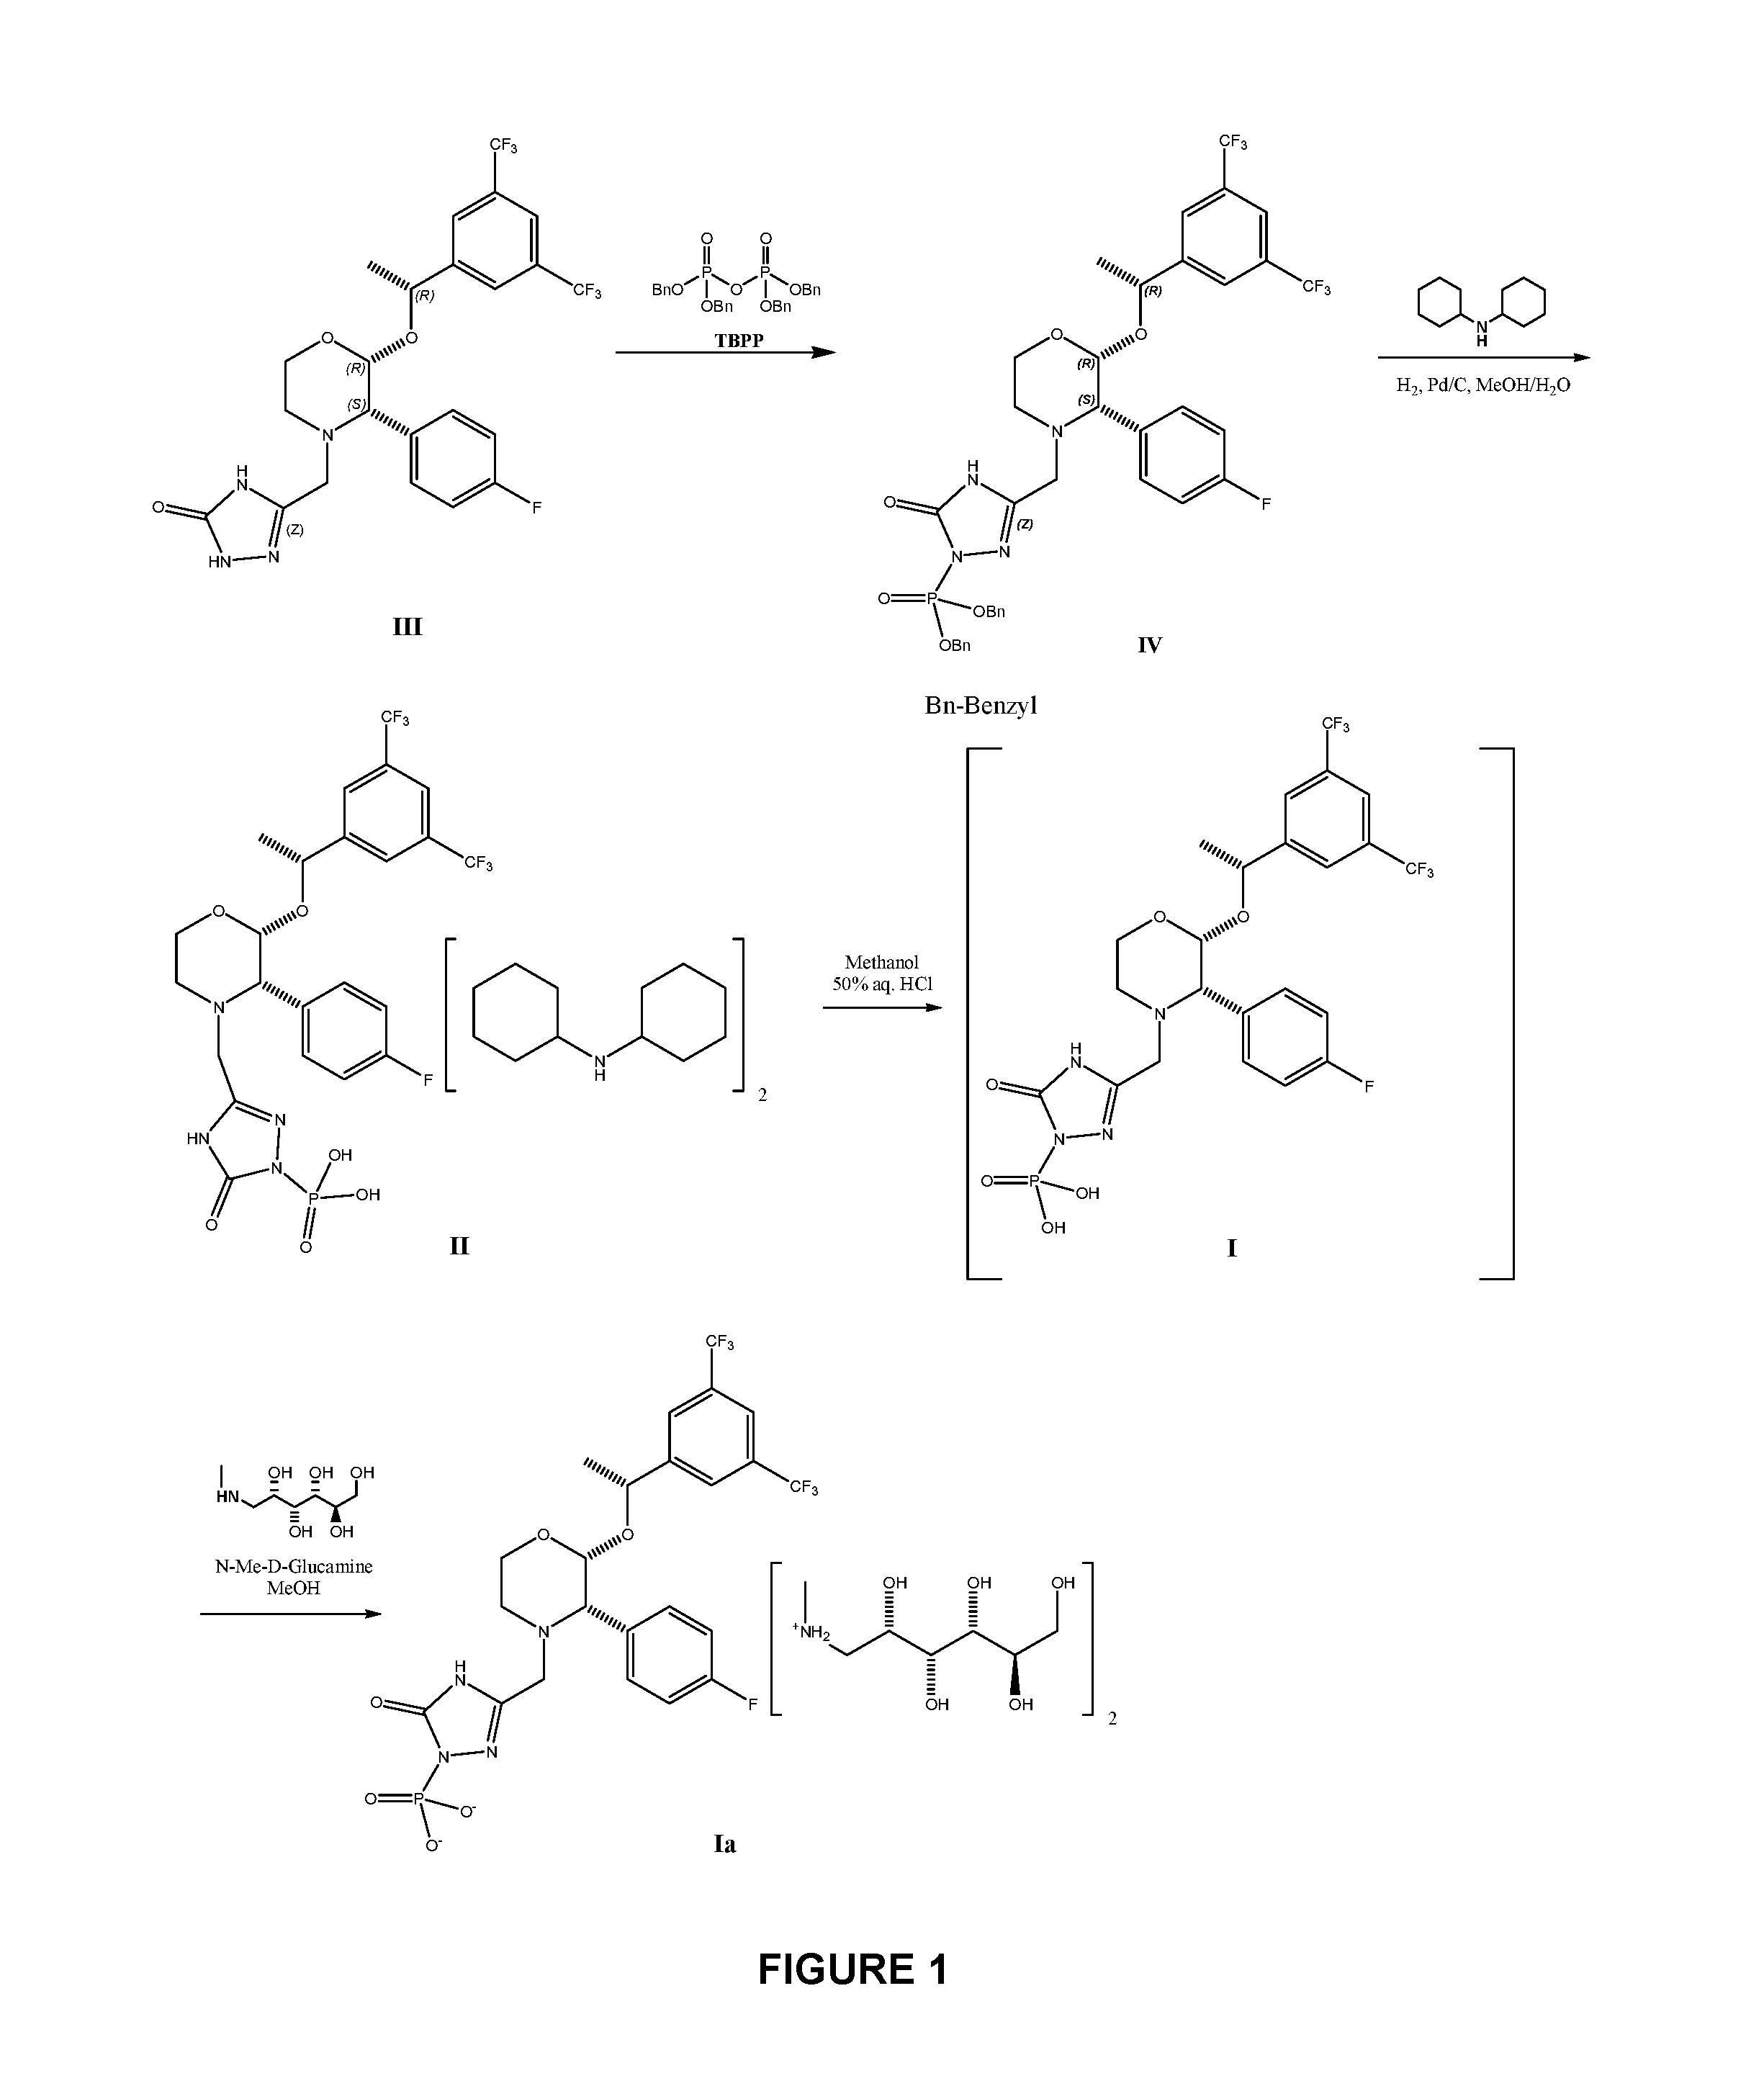 Crystalline Fosaprepitant Dicyclohexylamine Salt And Its Preparation